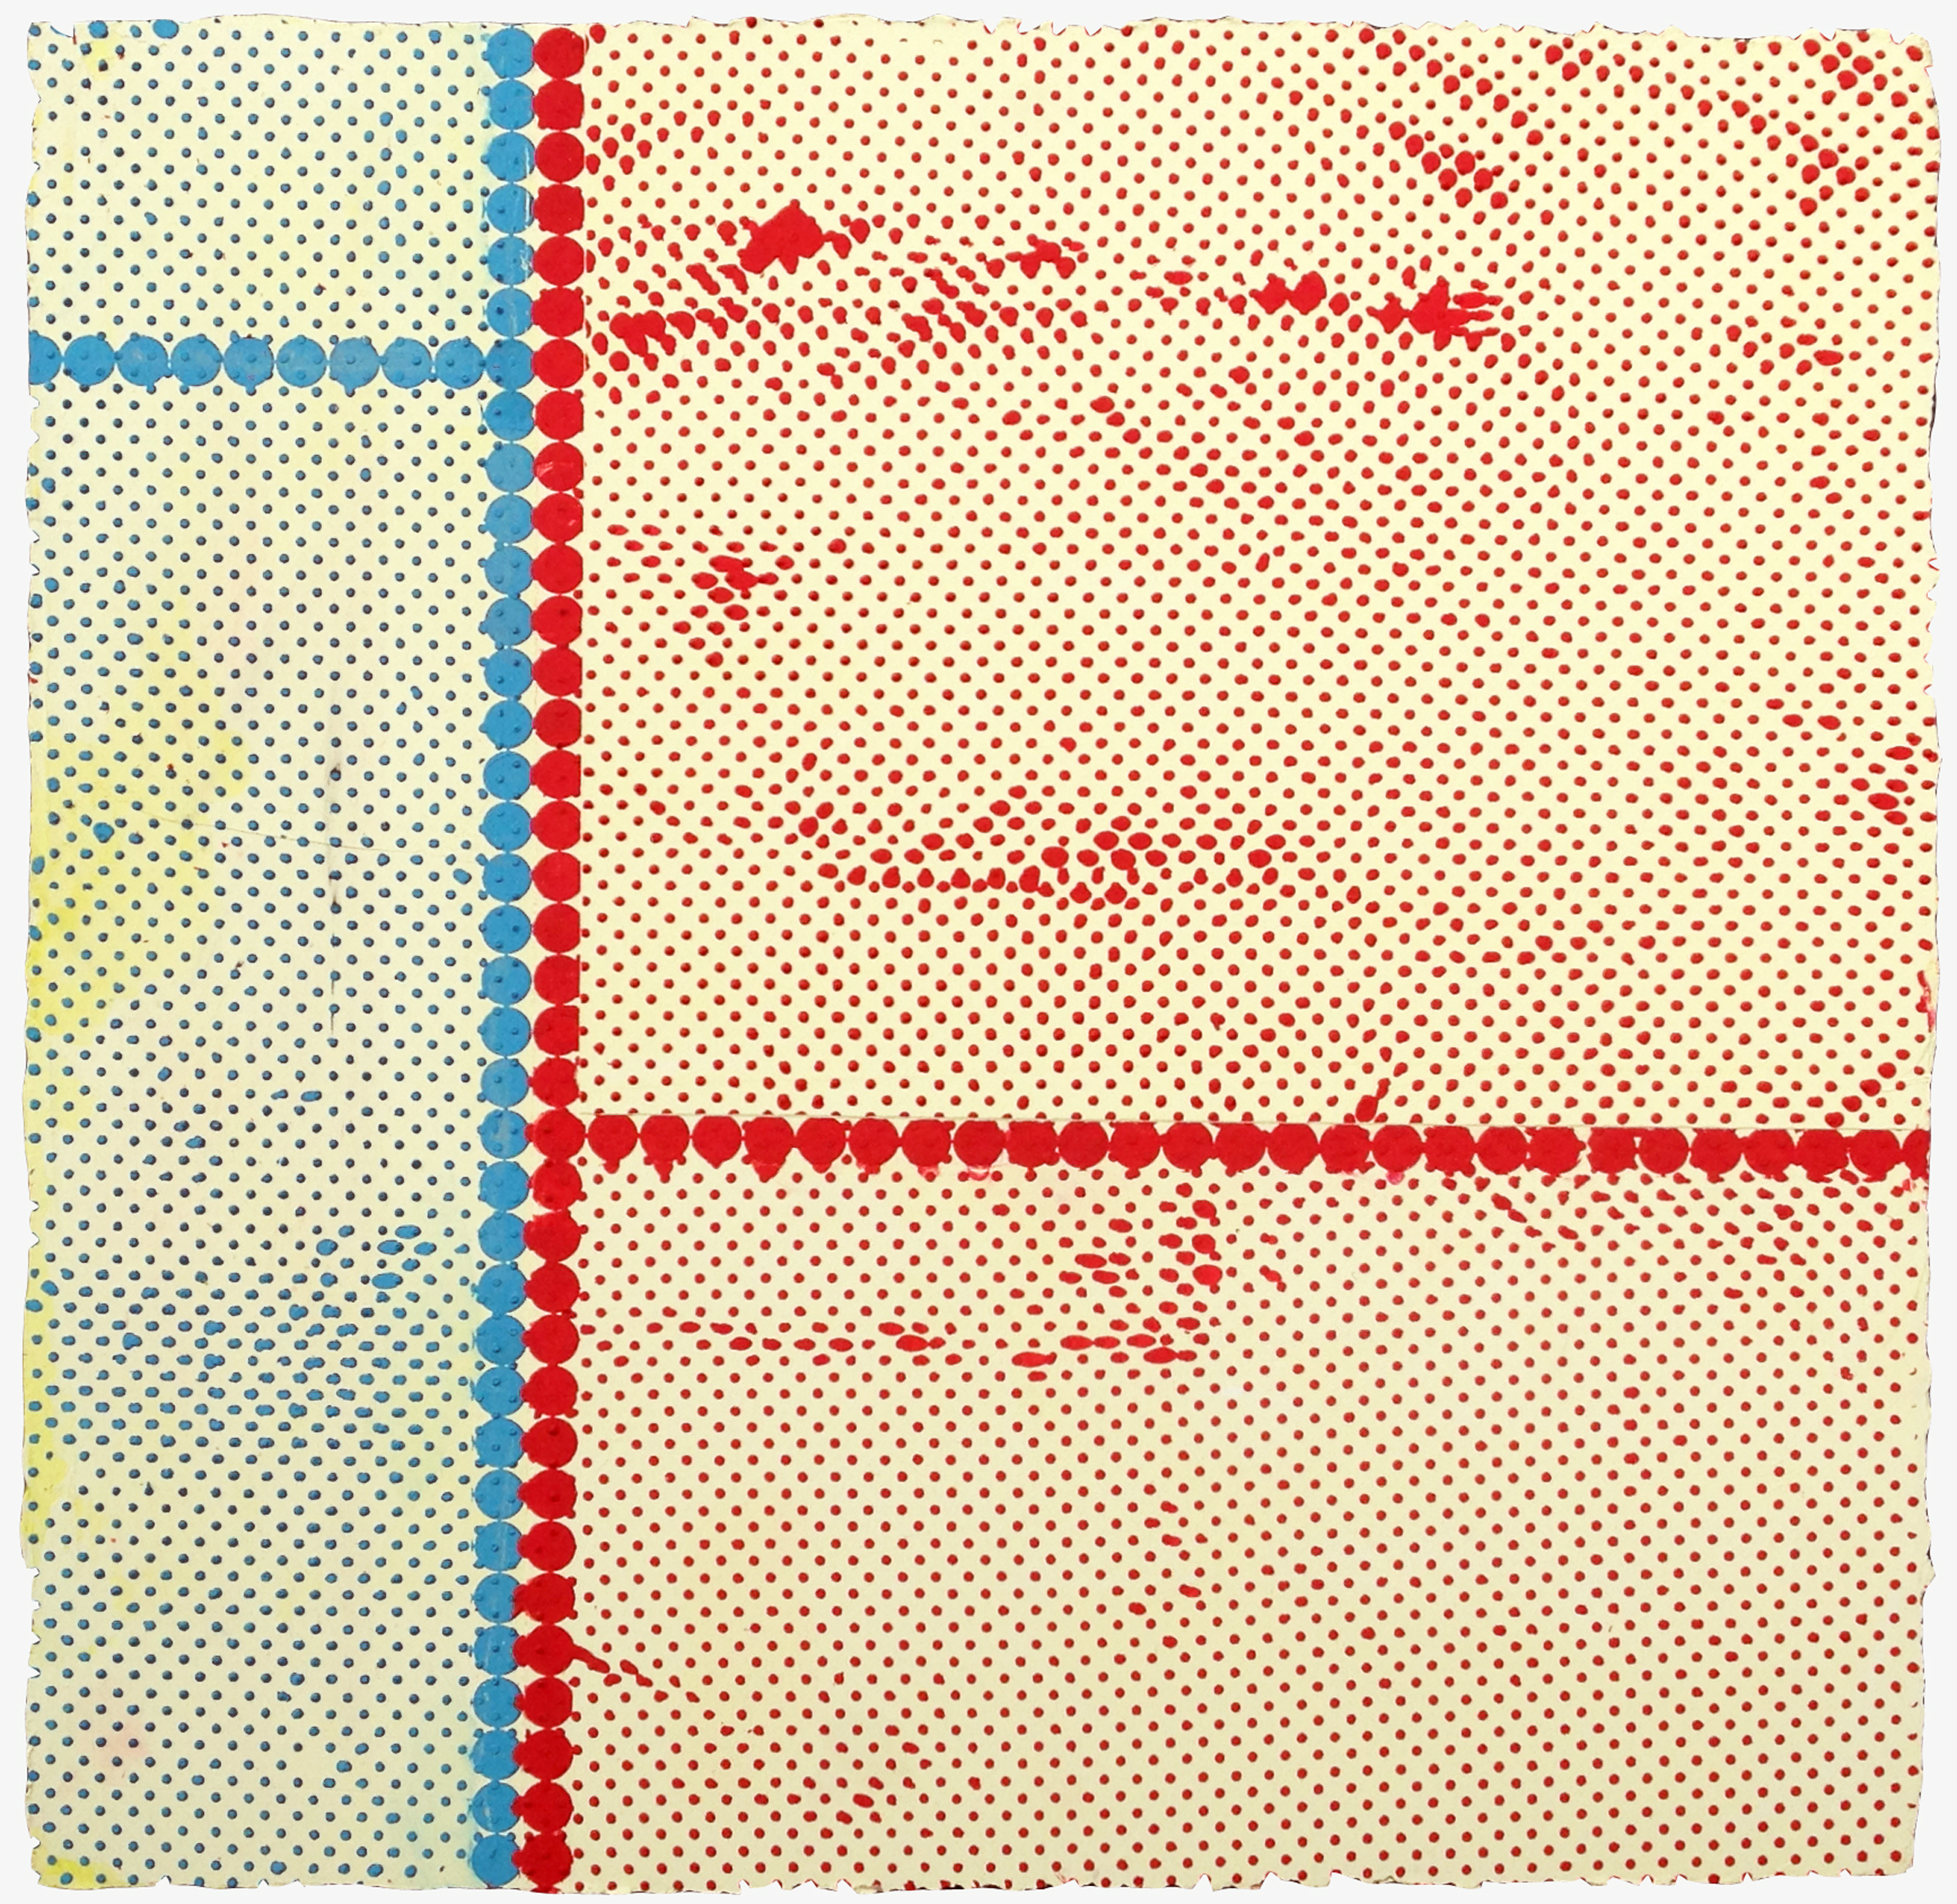   ELISE FERGUSON   TV , pigmented plaster on MDF panel, 18" x 18", 2014 